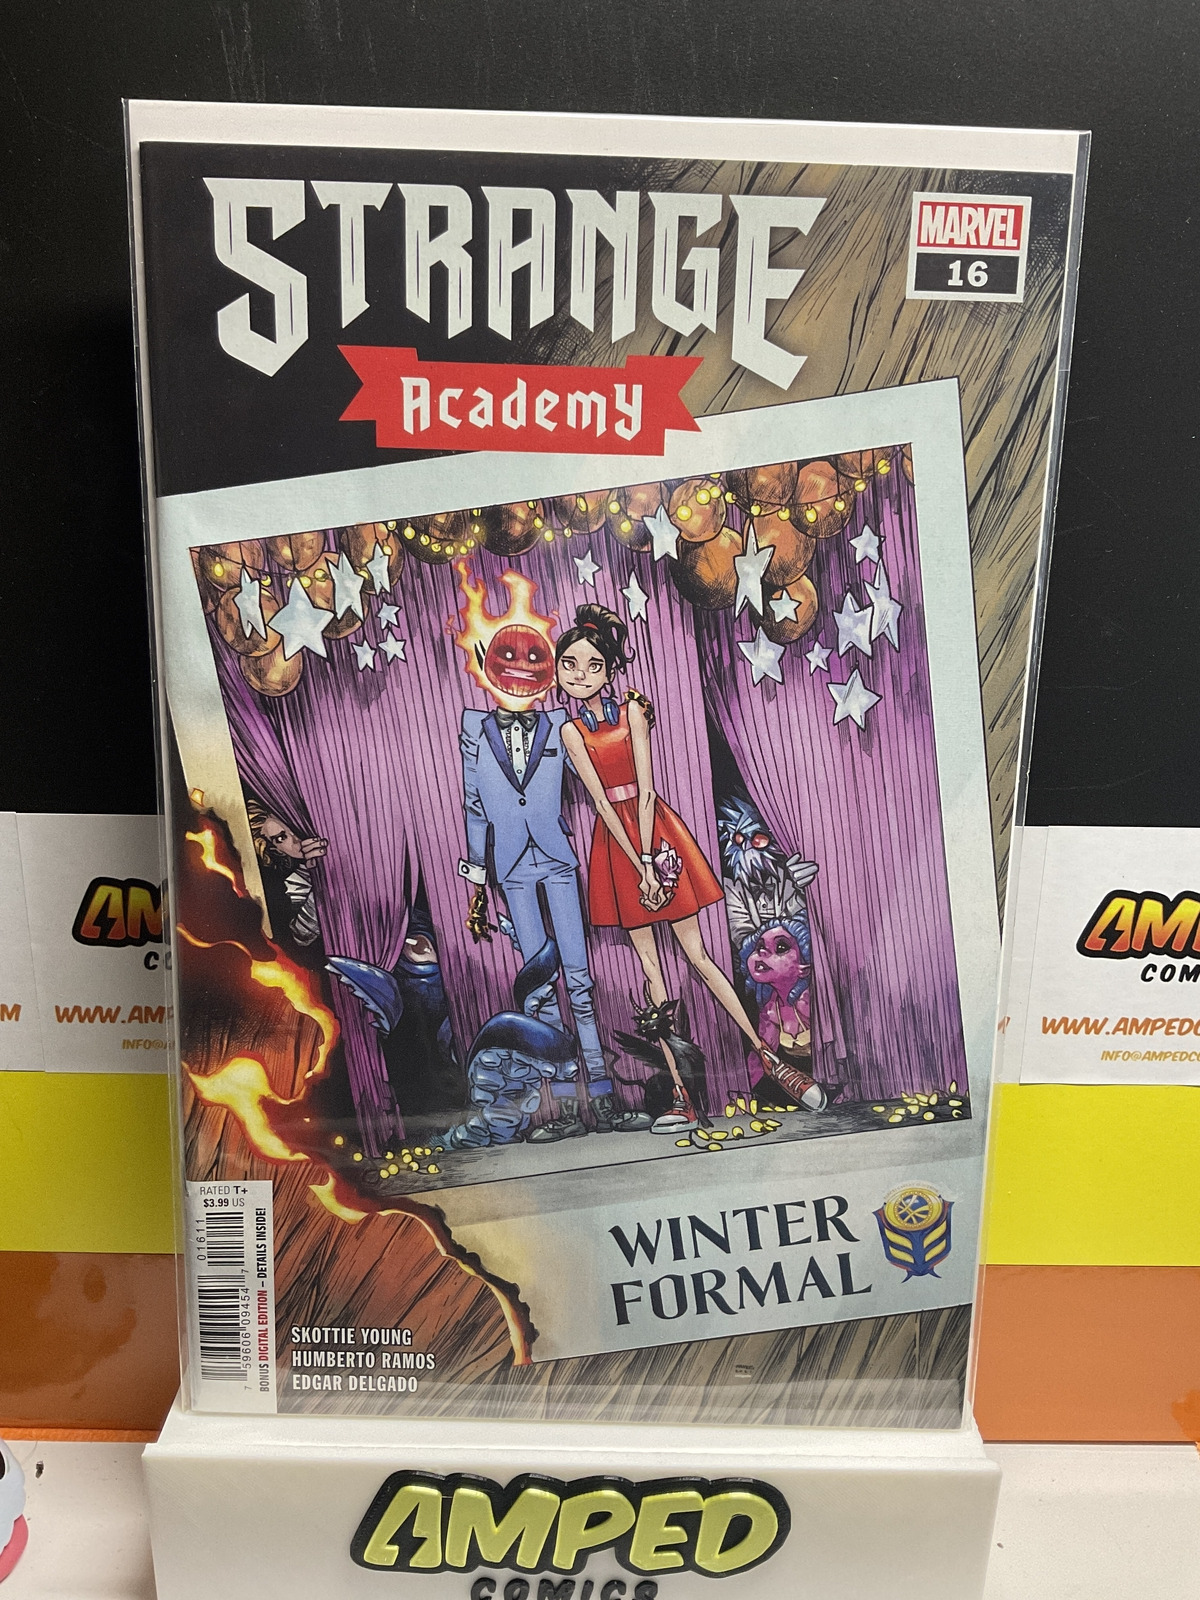 Strange Academy #16 Marvel Comics